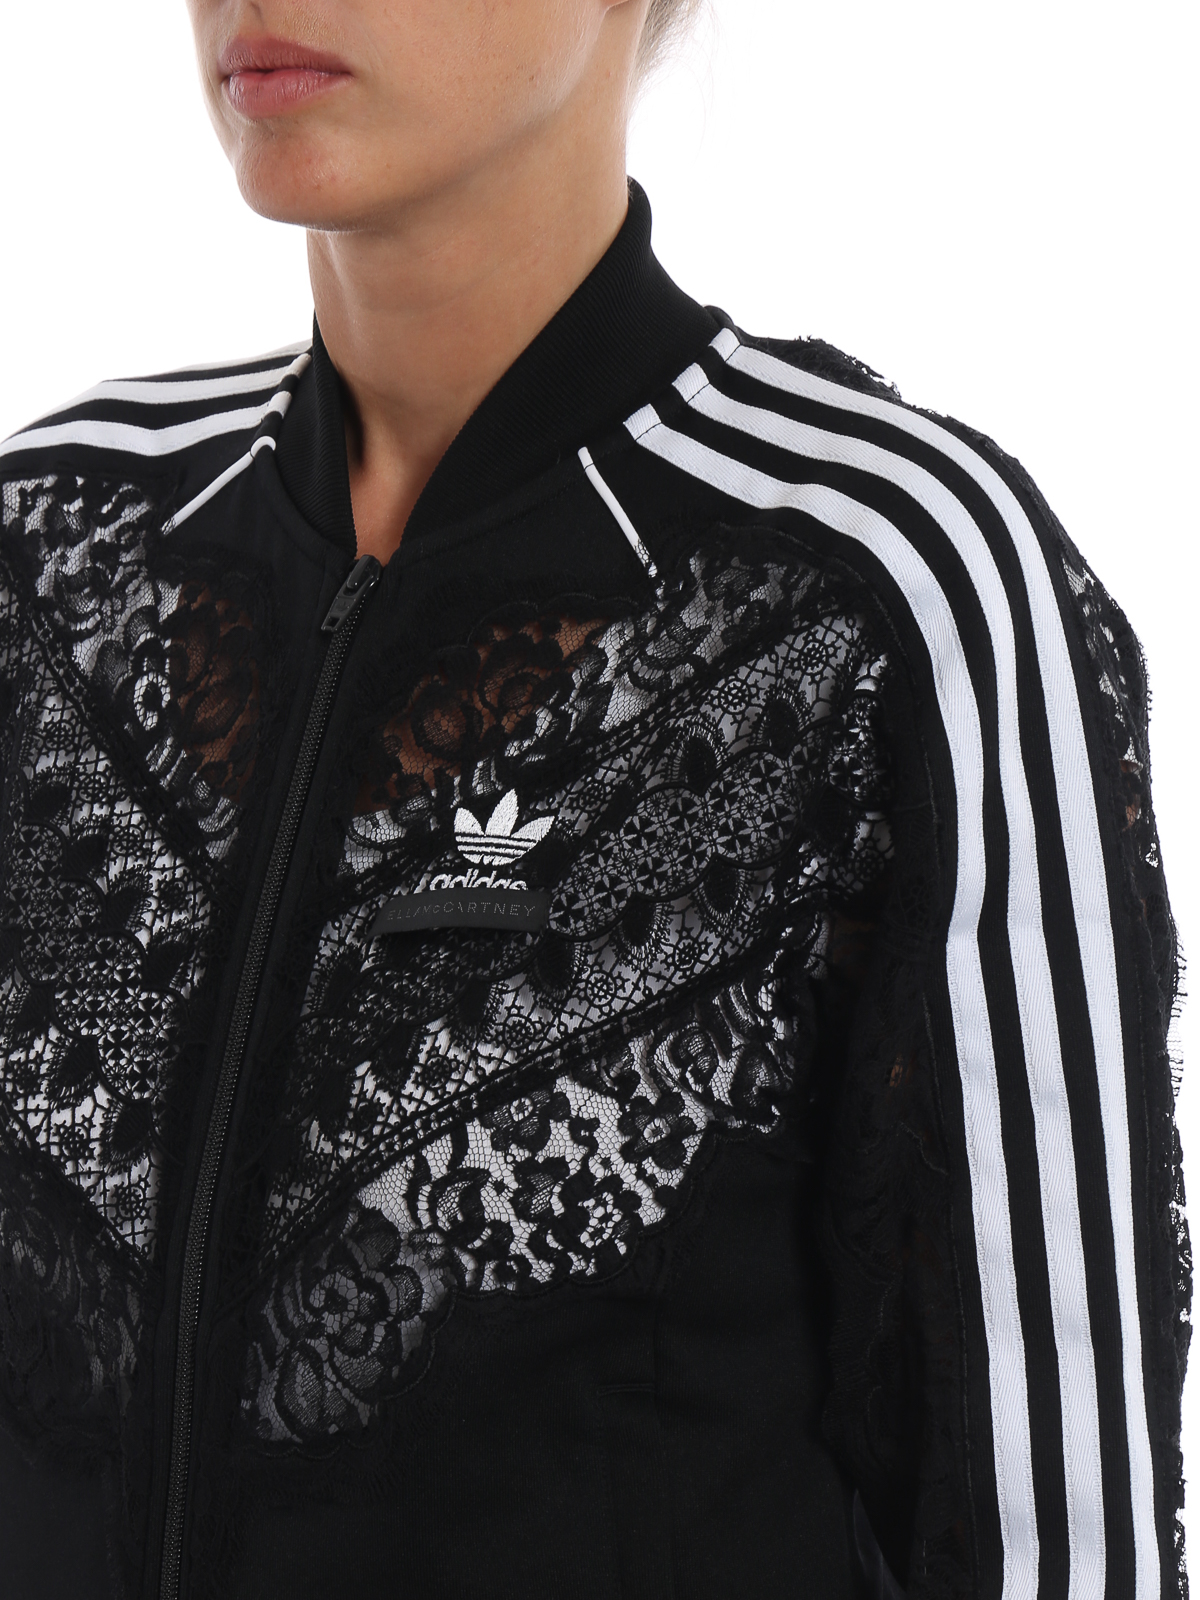 civile hurtig Imidlertid Sweatshirts & Sweaters Adidas by Stella McCartney - See-through lace detail  black sweat jacket - 536035SLW391000